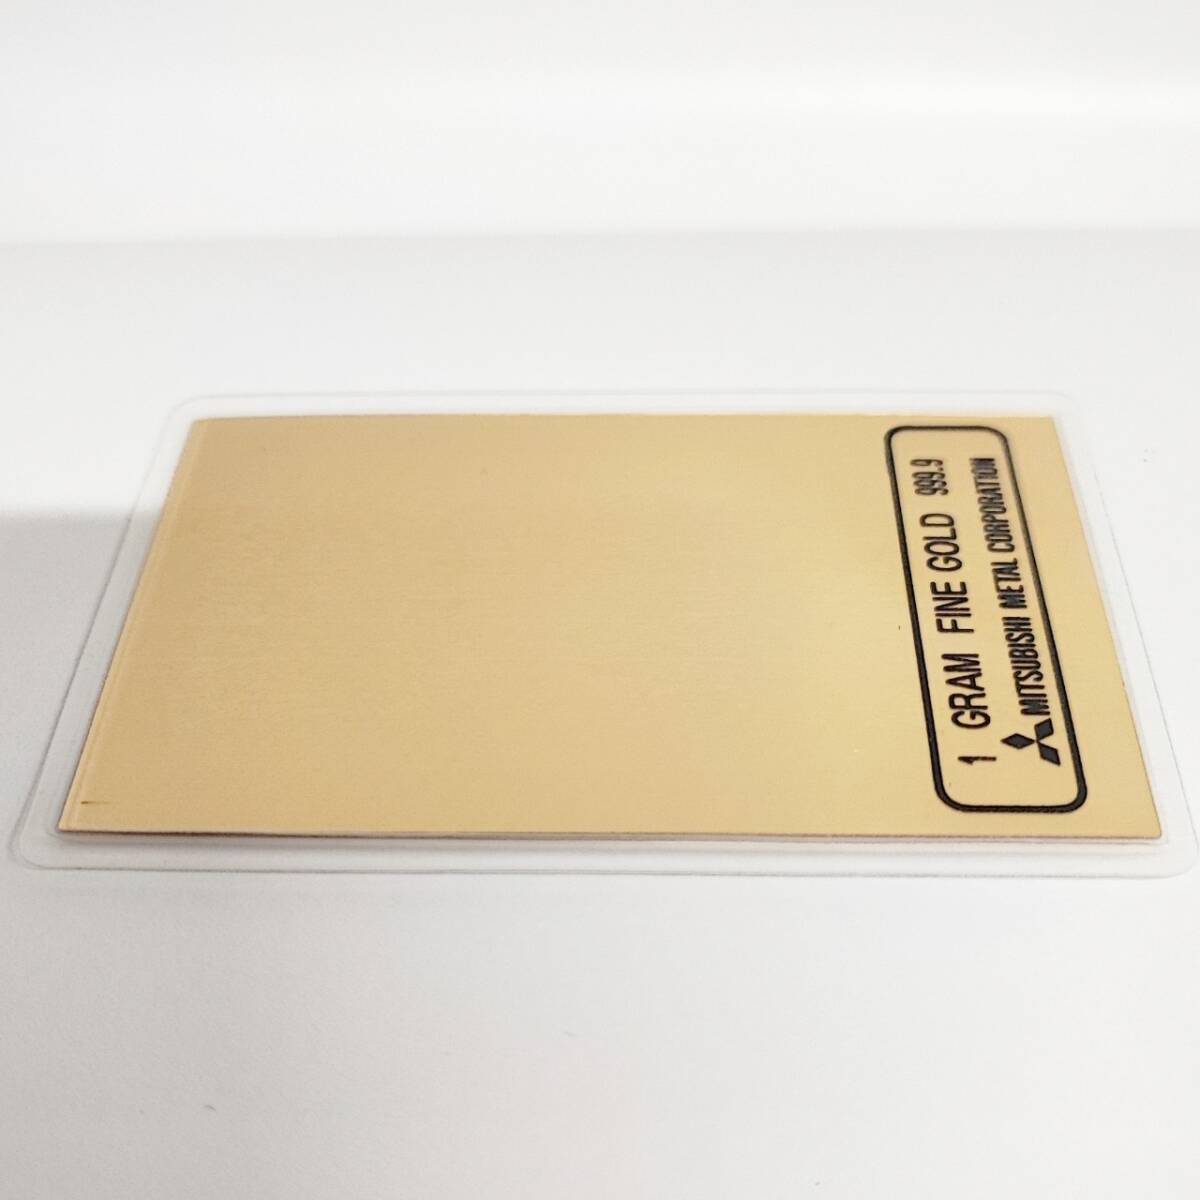 1 jpy ~[ case attaching ] Mitsubishi material MITSUBISHI METAL CORPORATION original gold card 1 GRAM FINE GOLD 999.9 1g 24K 24 gold G116214